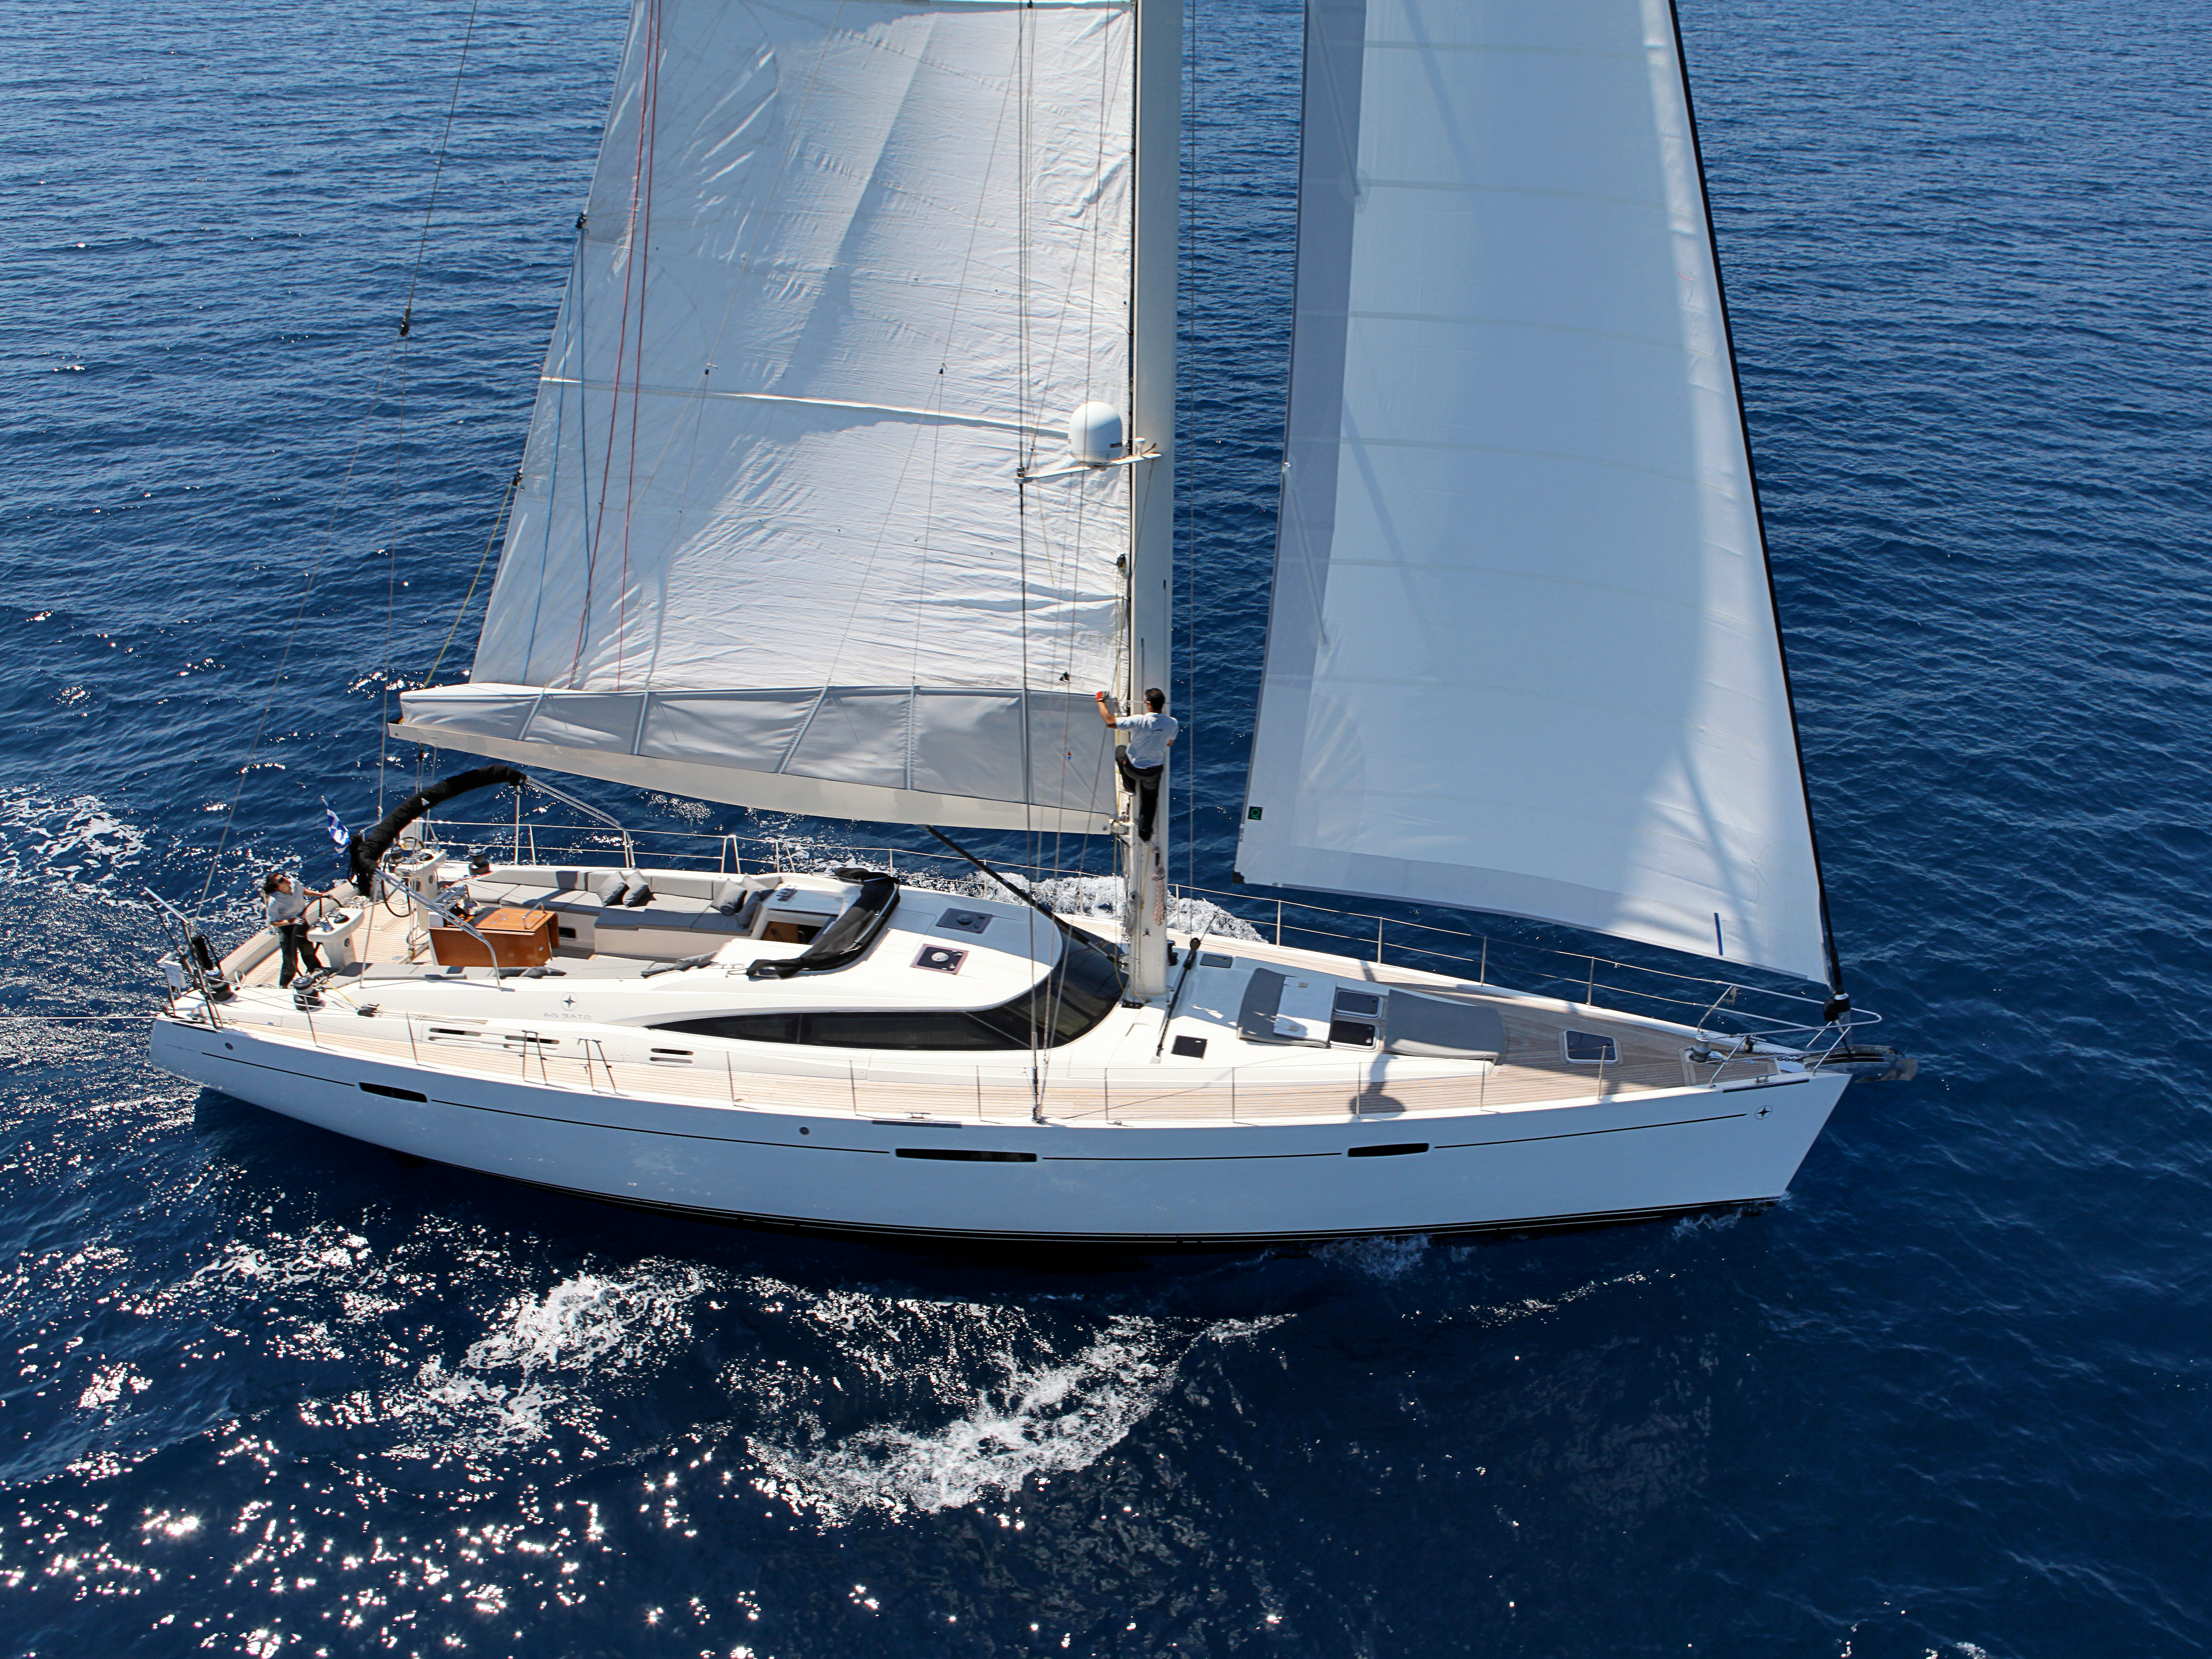 Gianetti Star 64 - Luxury yacht charter Greece & Boat hire in Greece Athens and Saronic Gulf Athens Hellinikon Agios Kosmas Marina 1